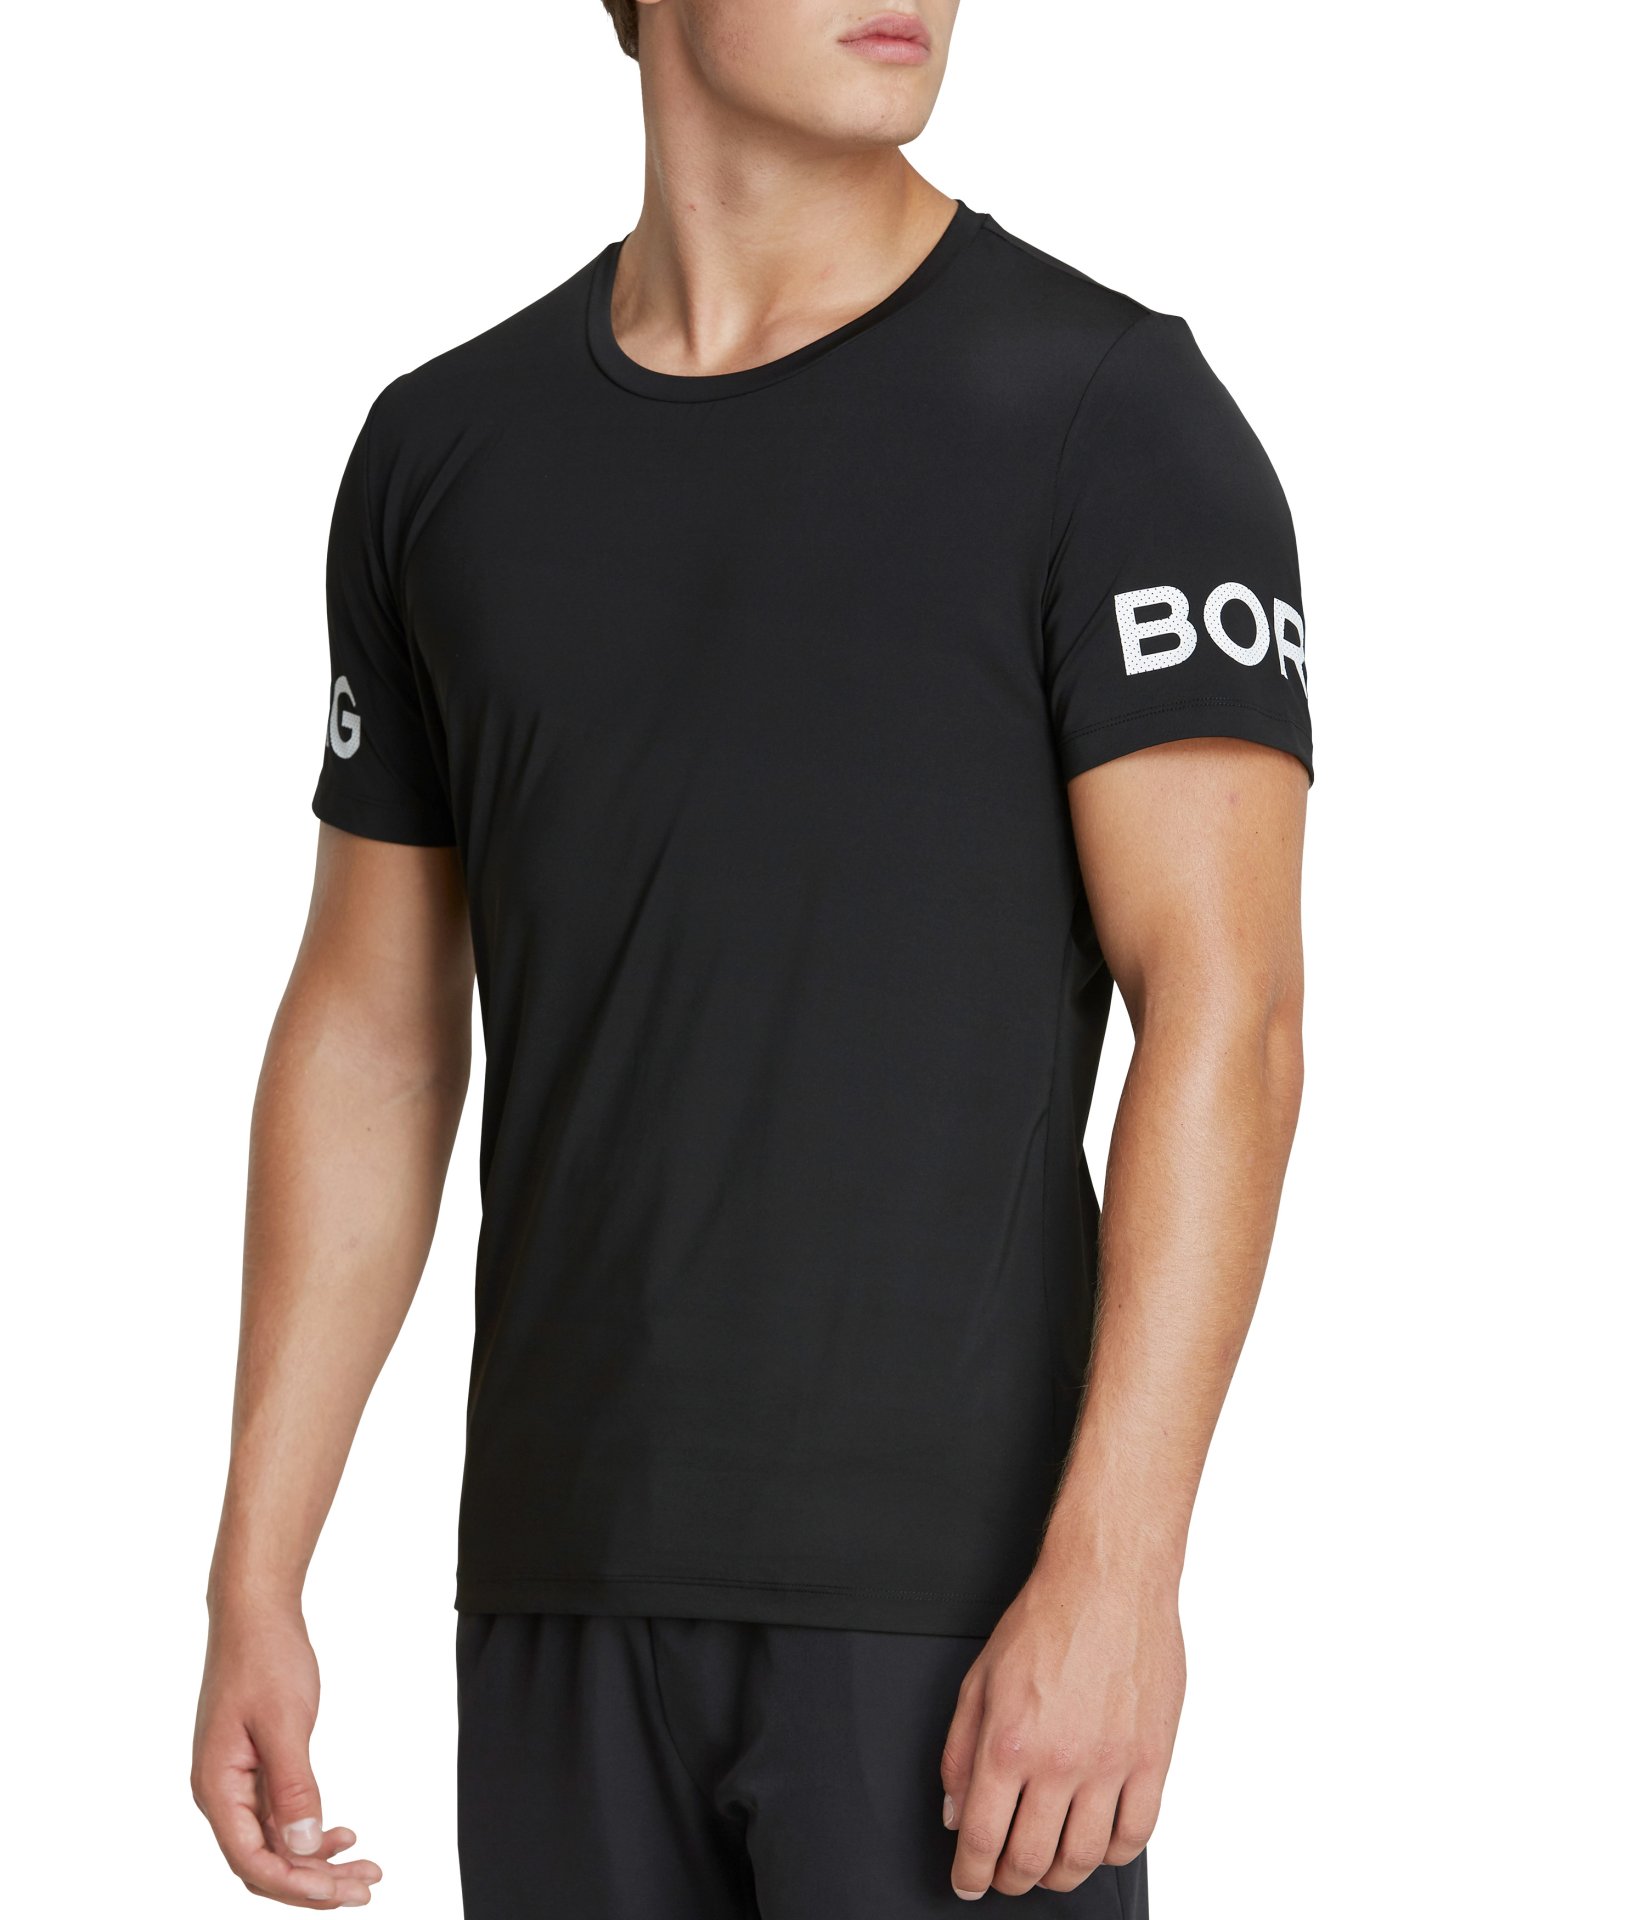 BJORN BORG - Ανδρικό t-shirt BJORN BORG μαύρο Ανδρικά/Ρούχα/Αθλητικά/T-shirt